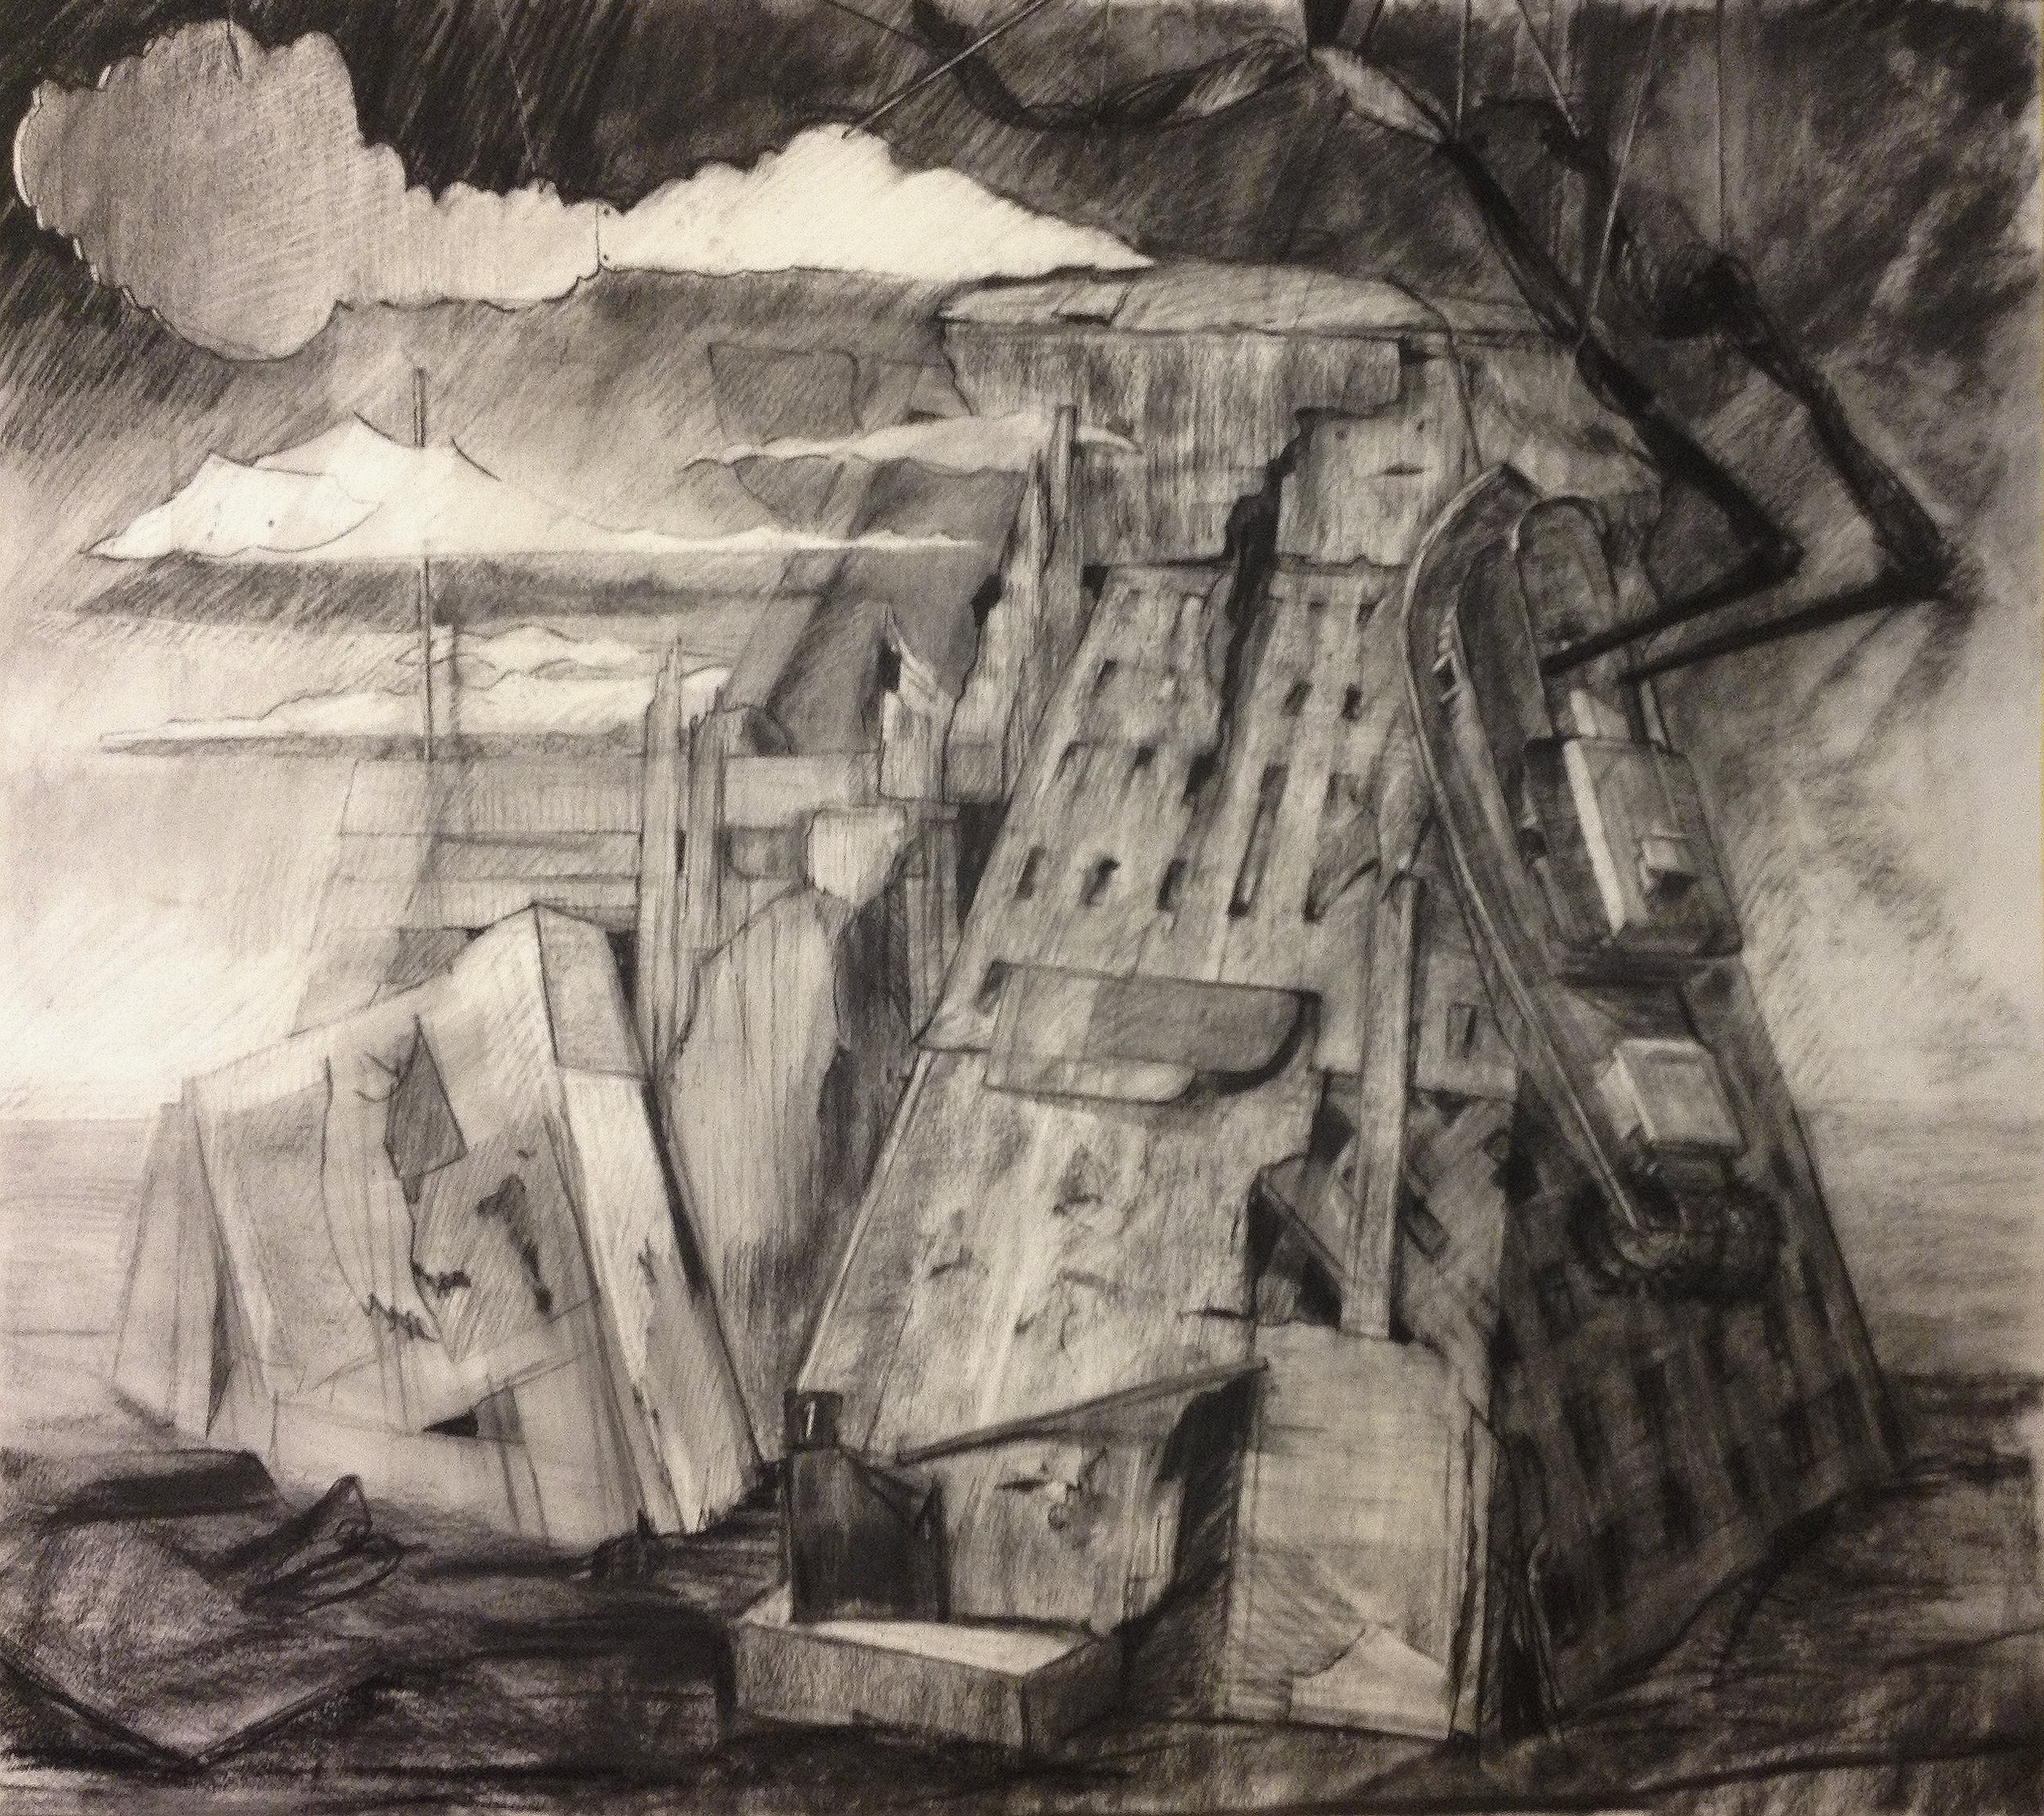    Fitzcarraldo,   33 x 40, charcoal on paper, 2014 